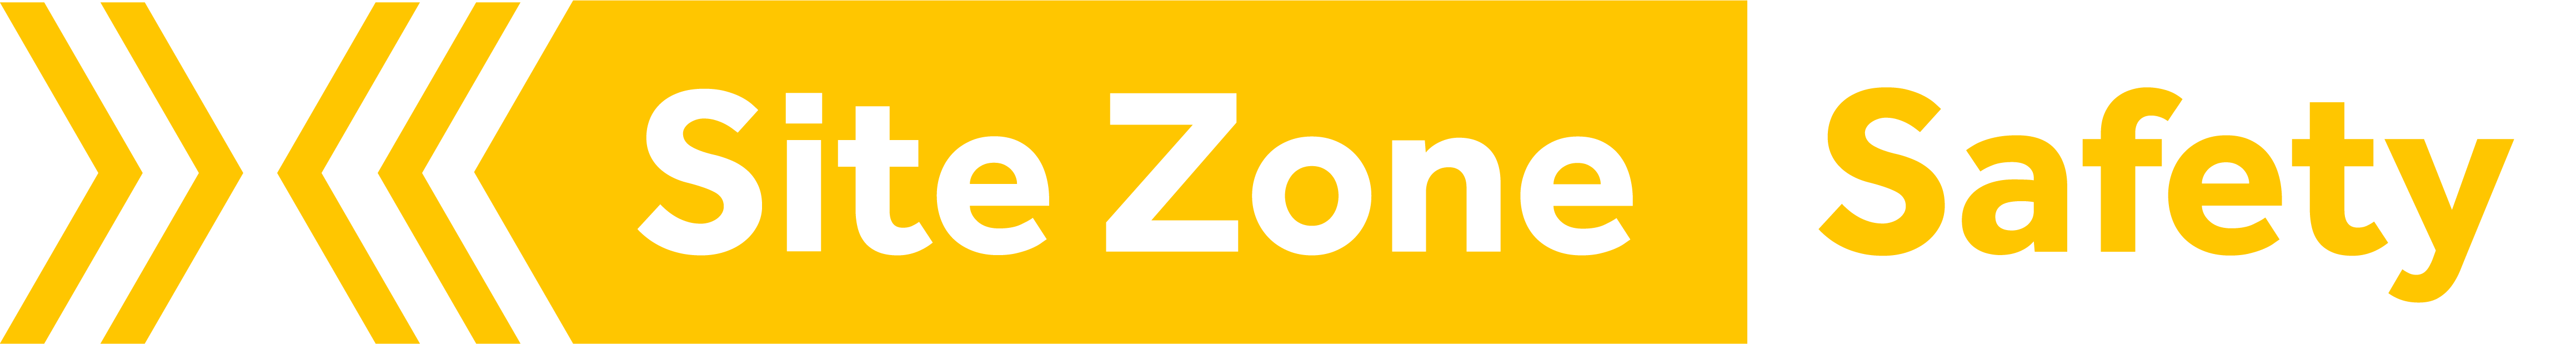 SiteZone Safety